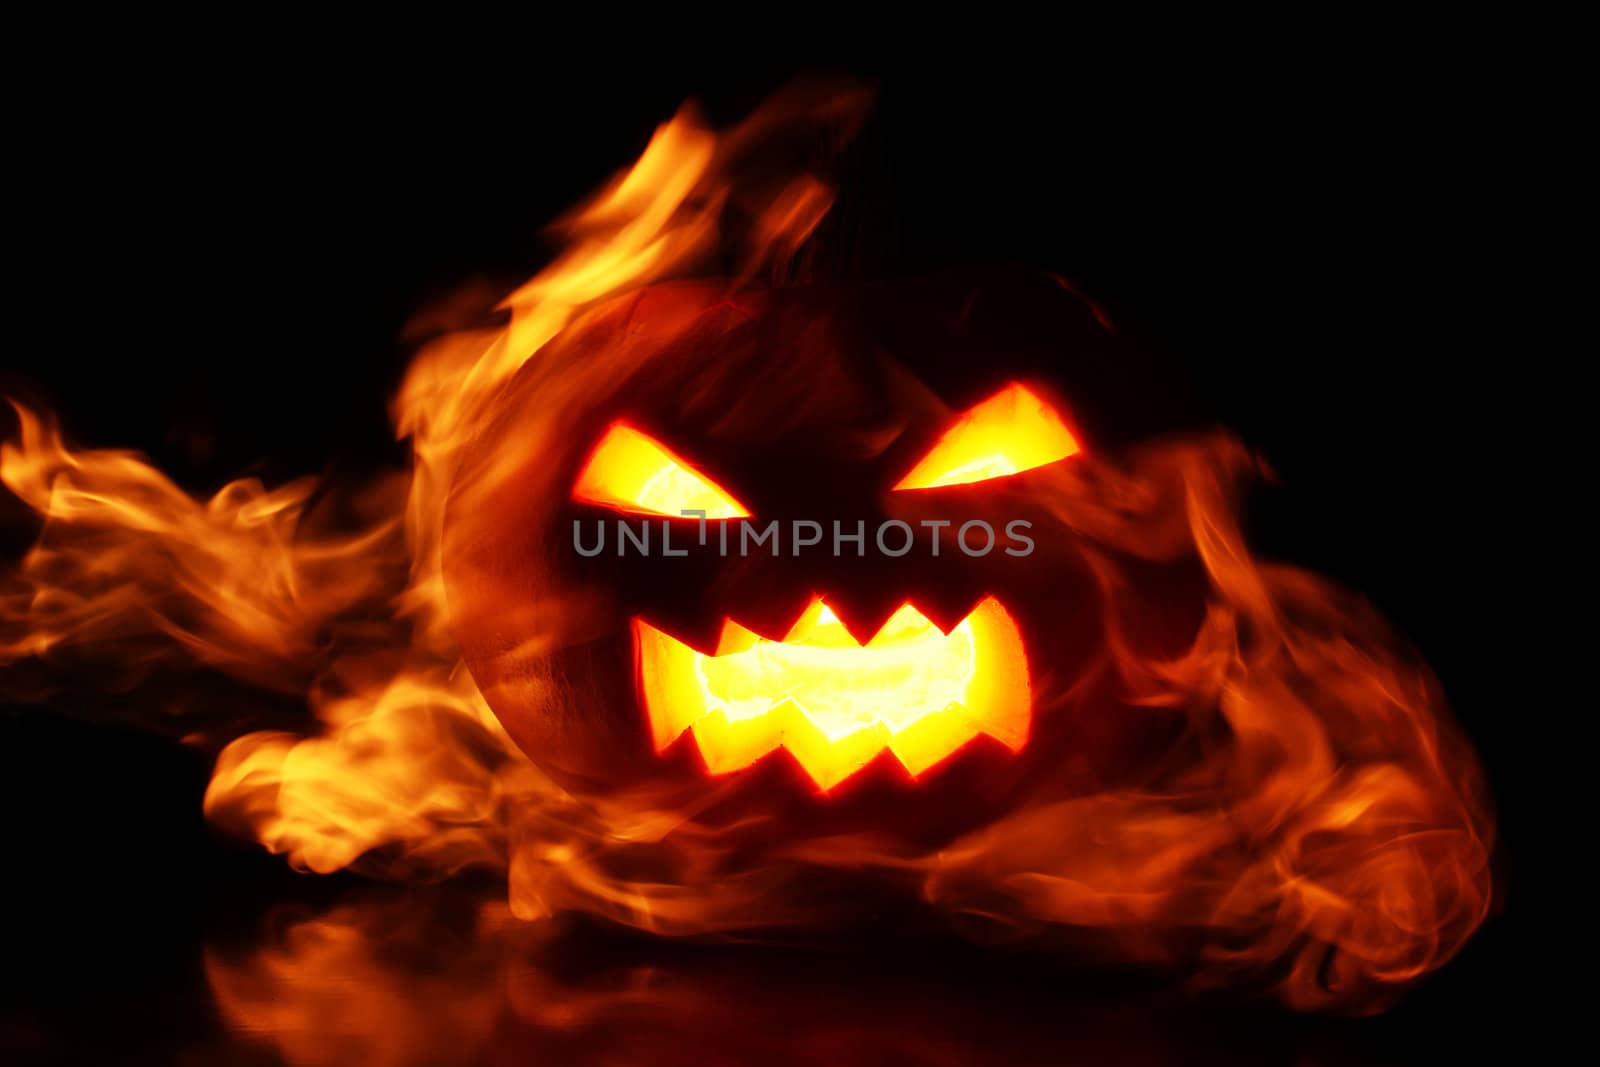 Halloween pumpkin in fire by rufatjumali